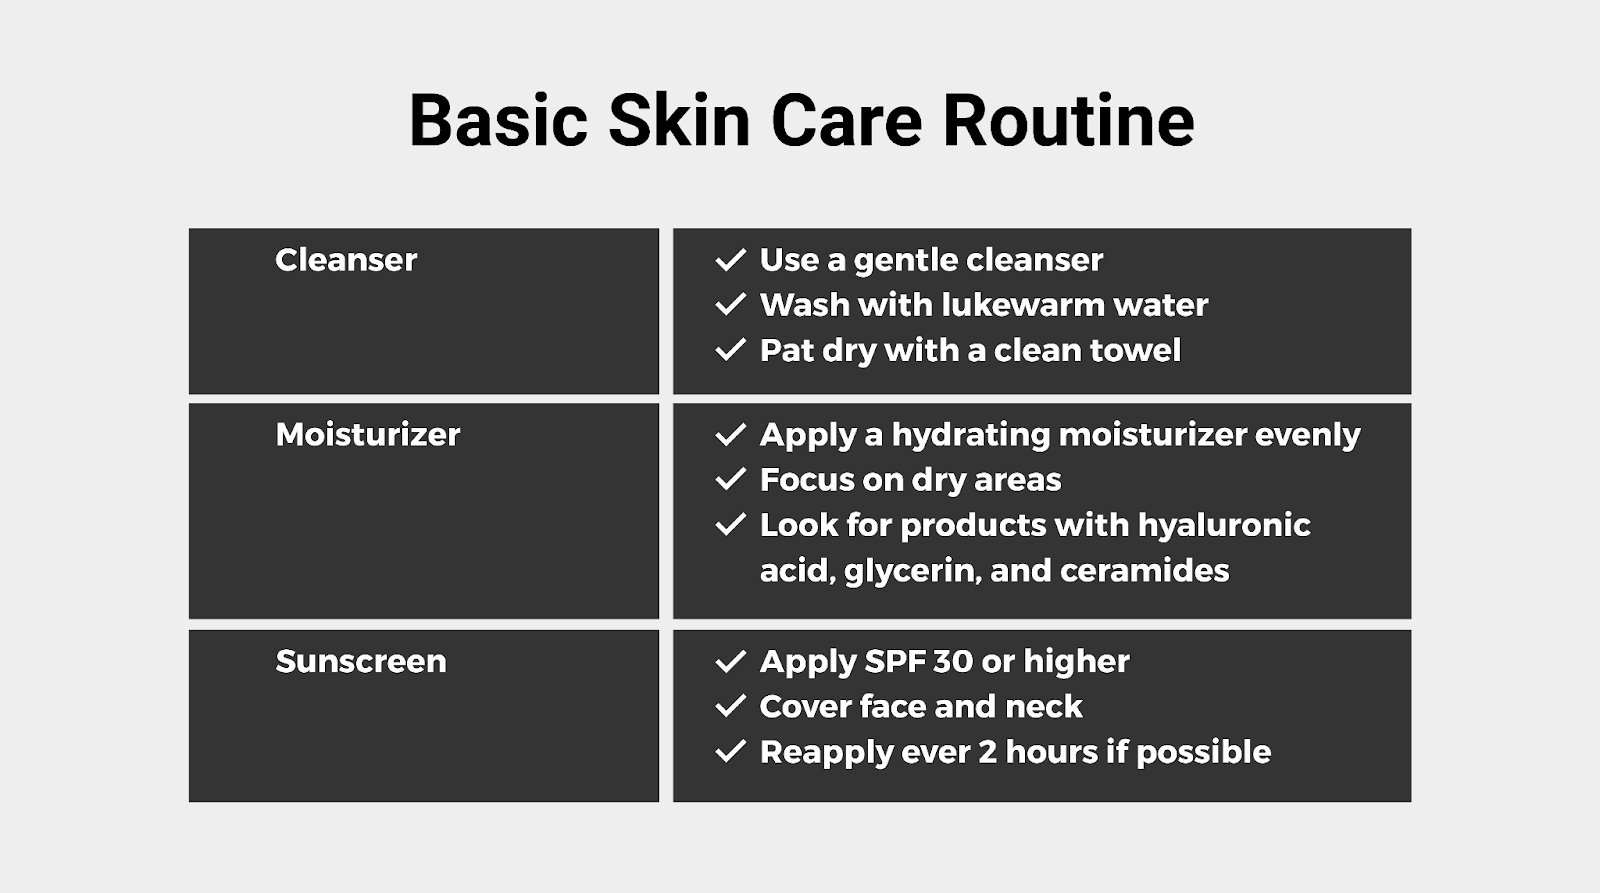 Basic skincare routine